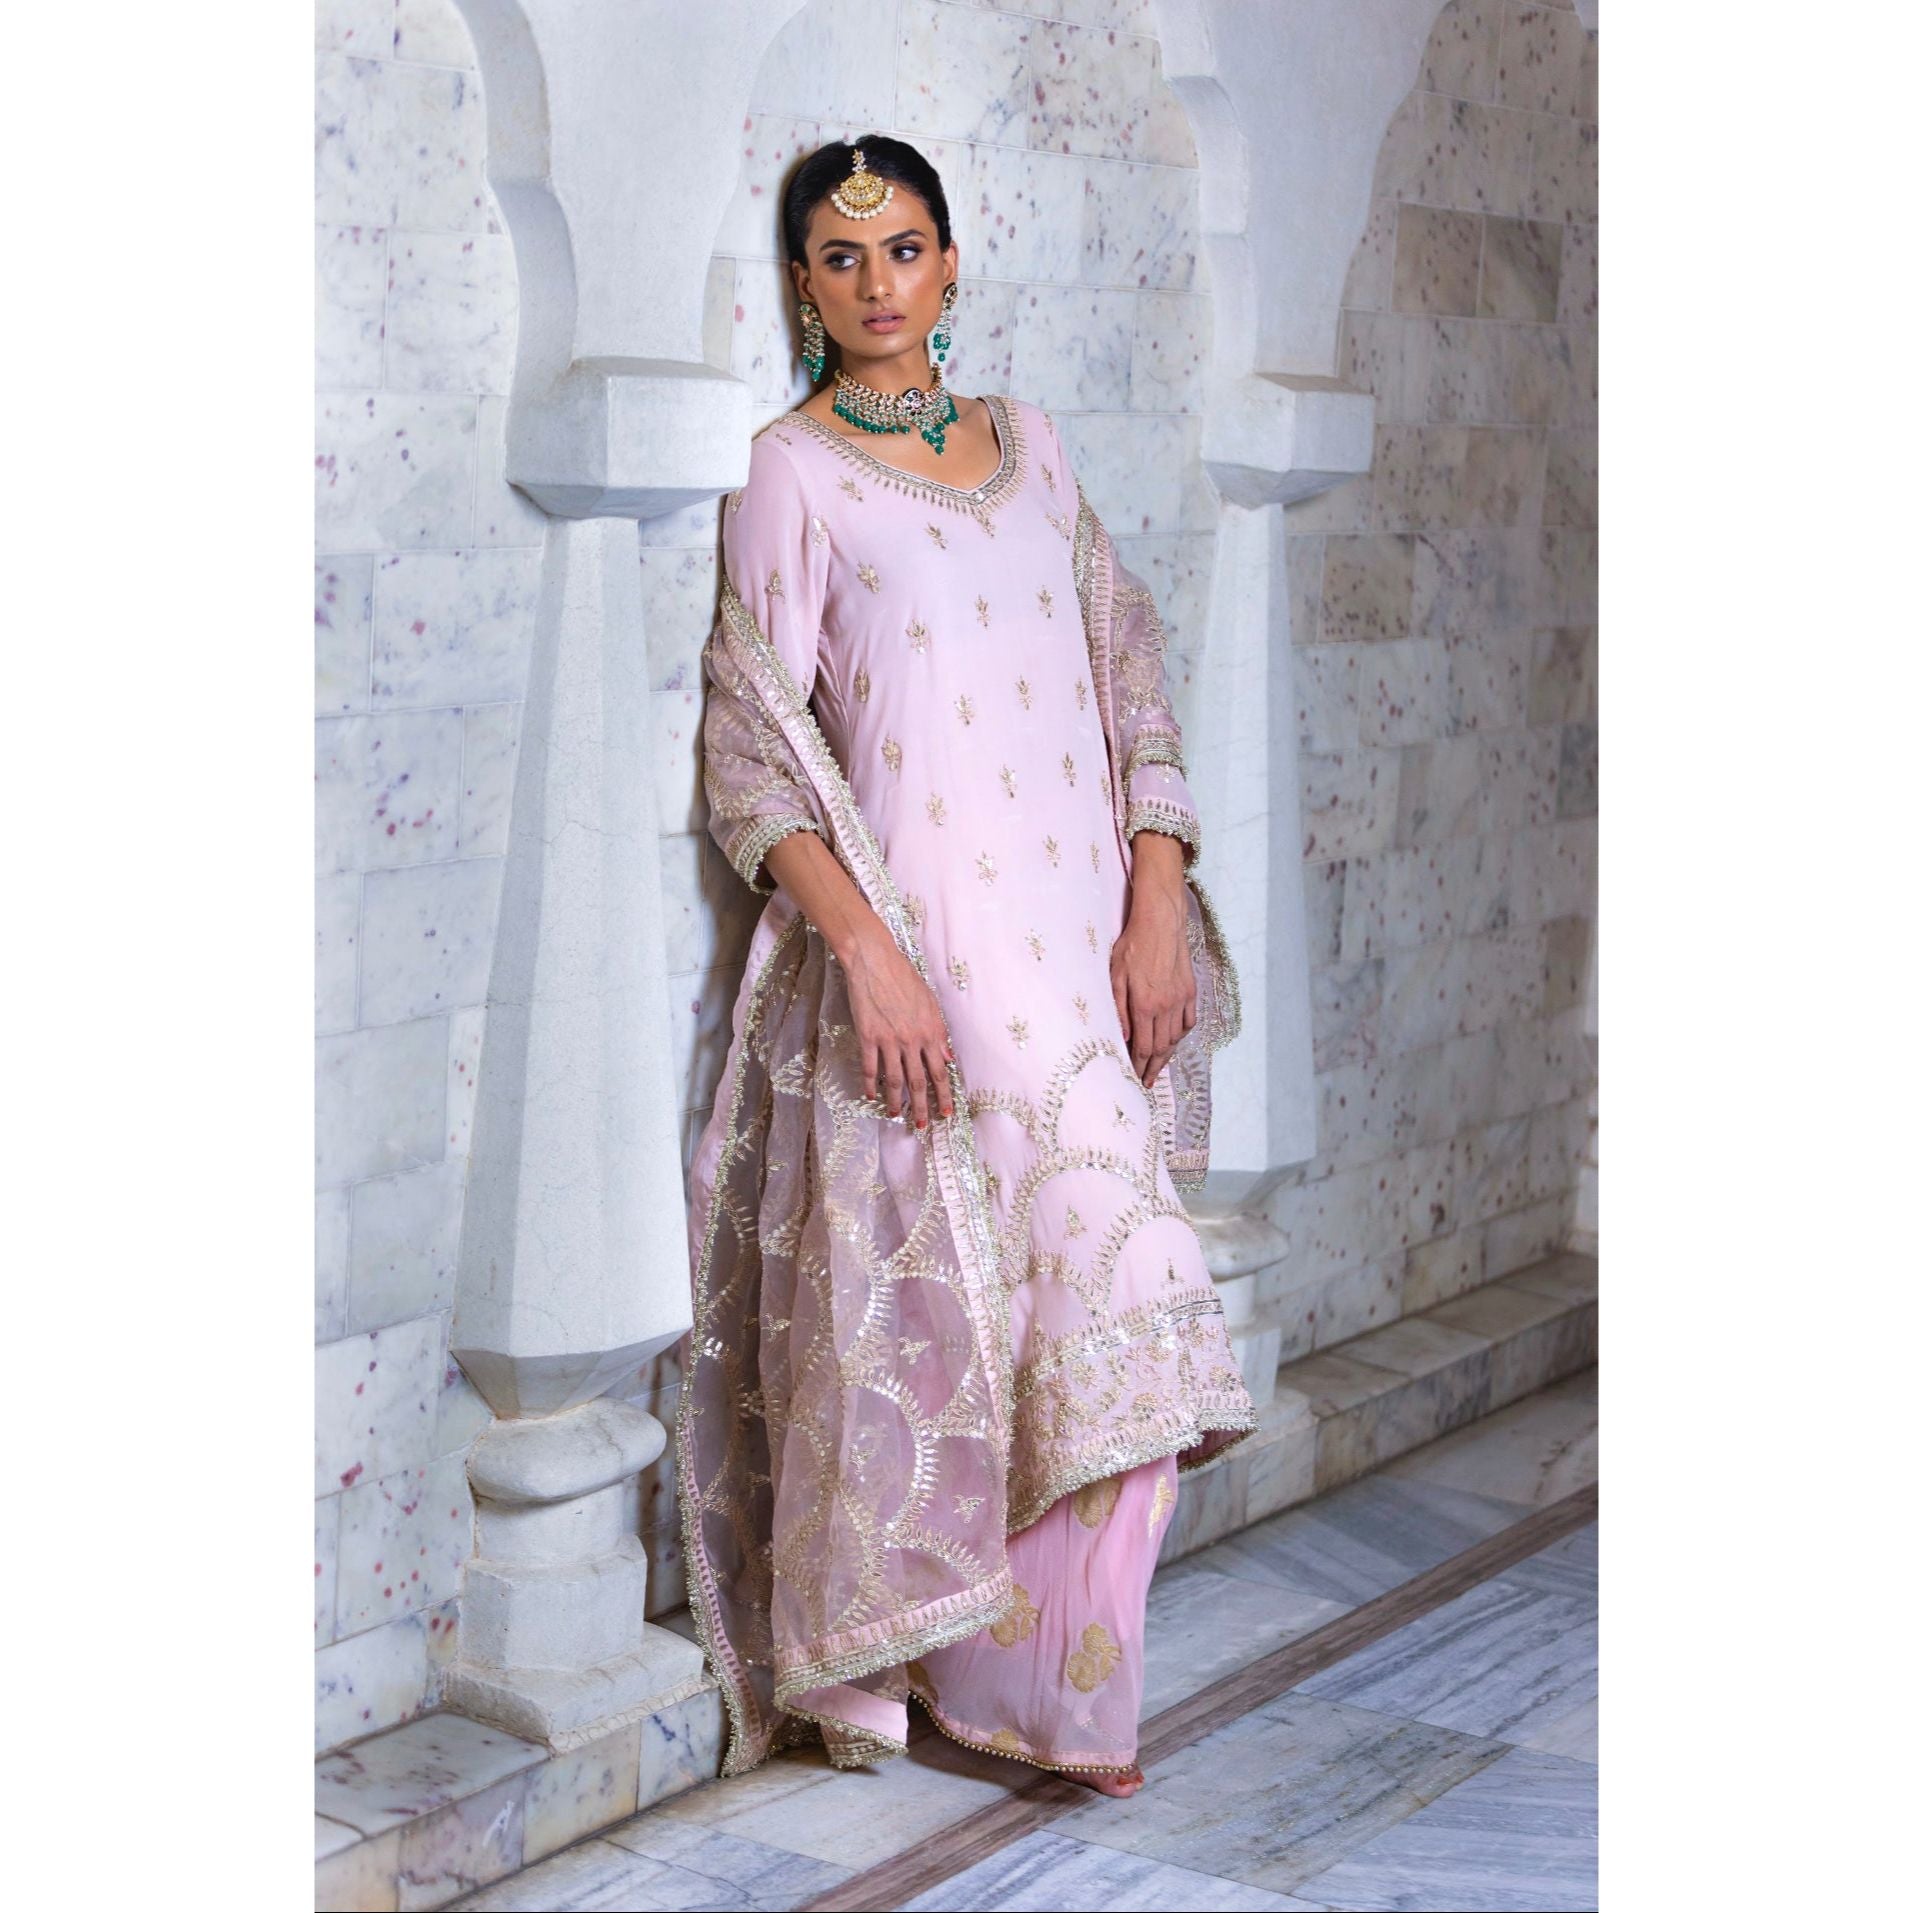 Pastel Pink Embroidered Sharara Set - Indian Designer Bridal Wedding Outfit